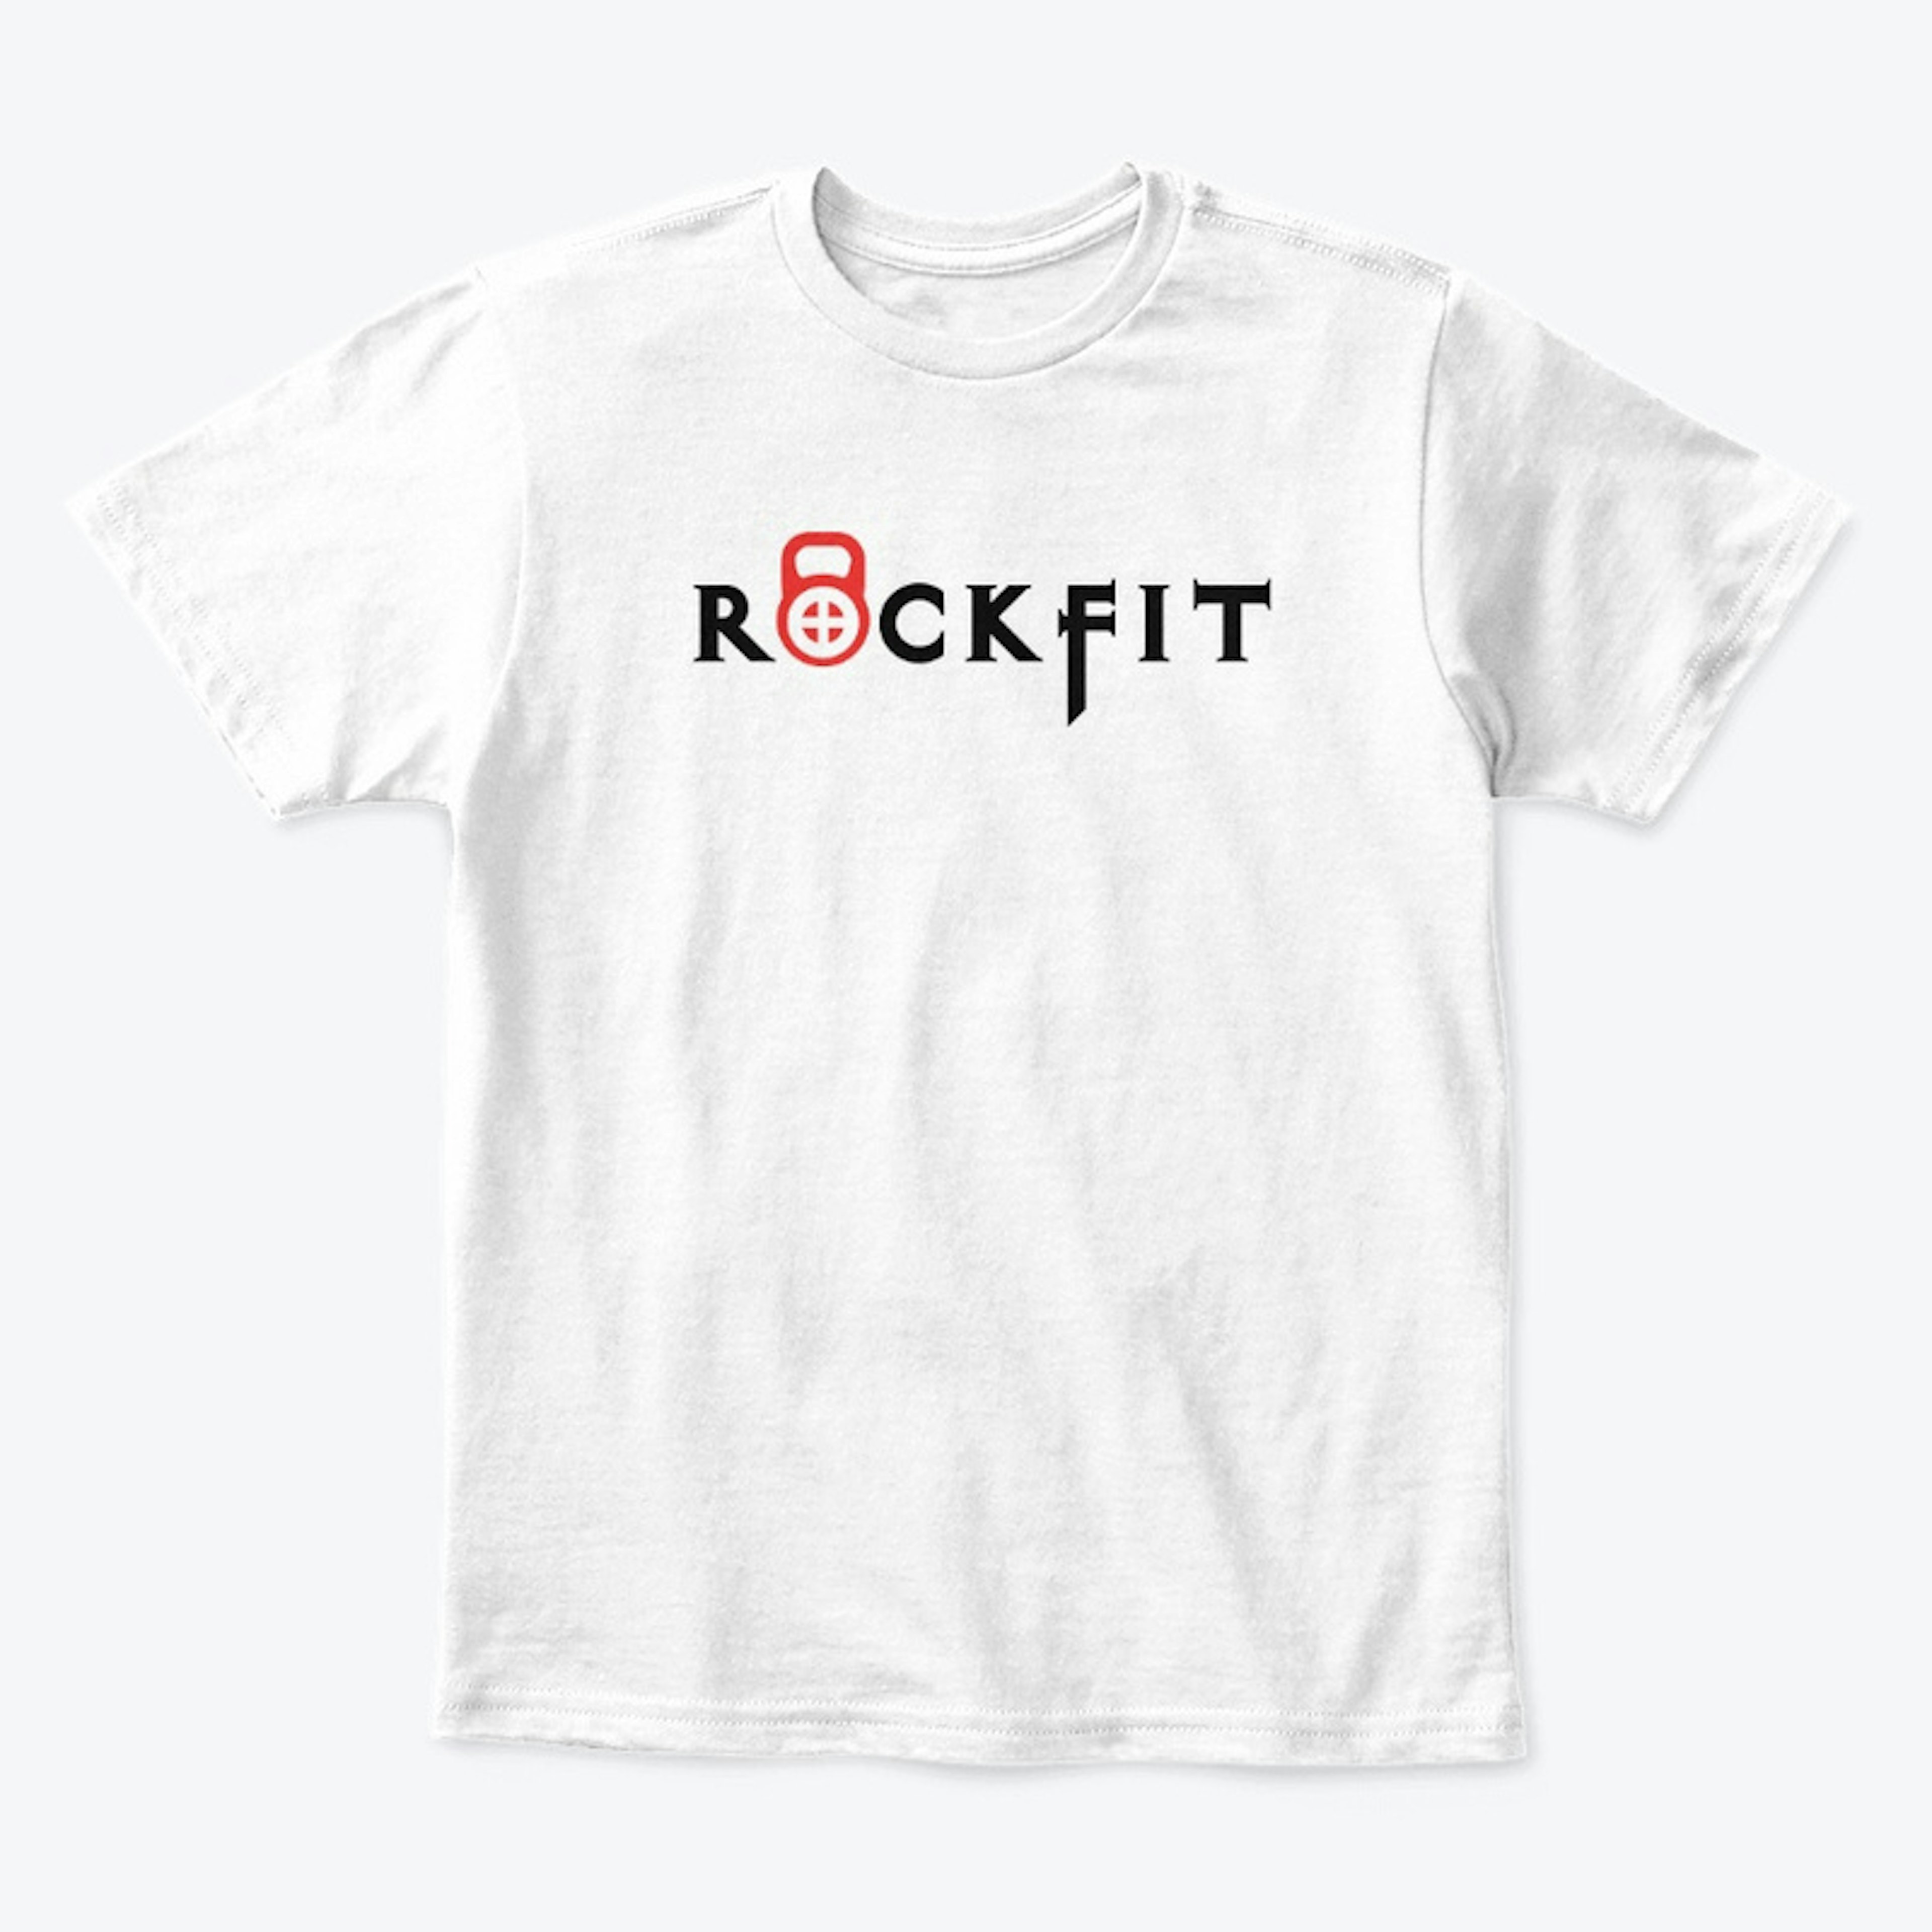 Rockfit Kid's White Shirt